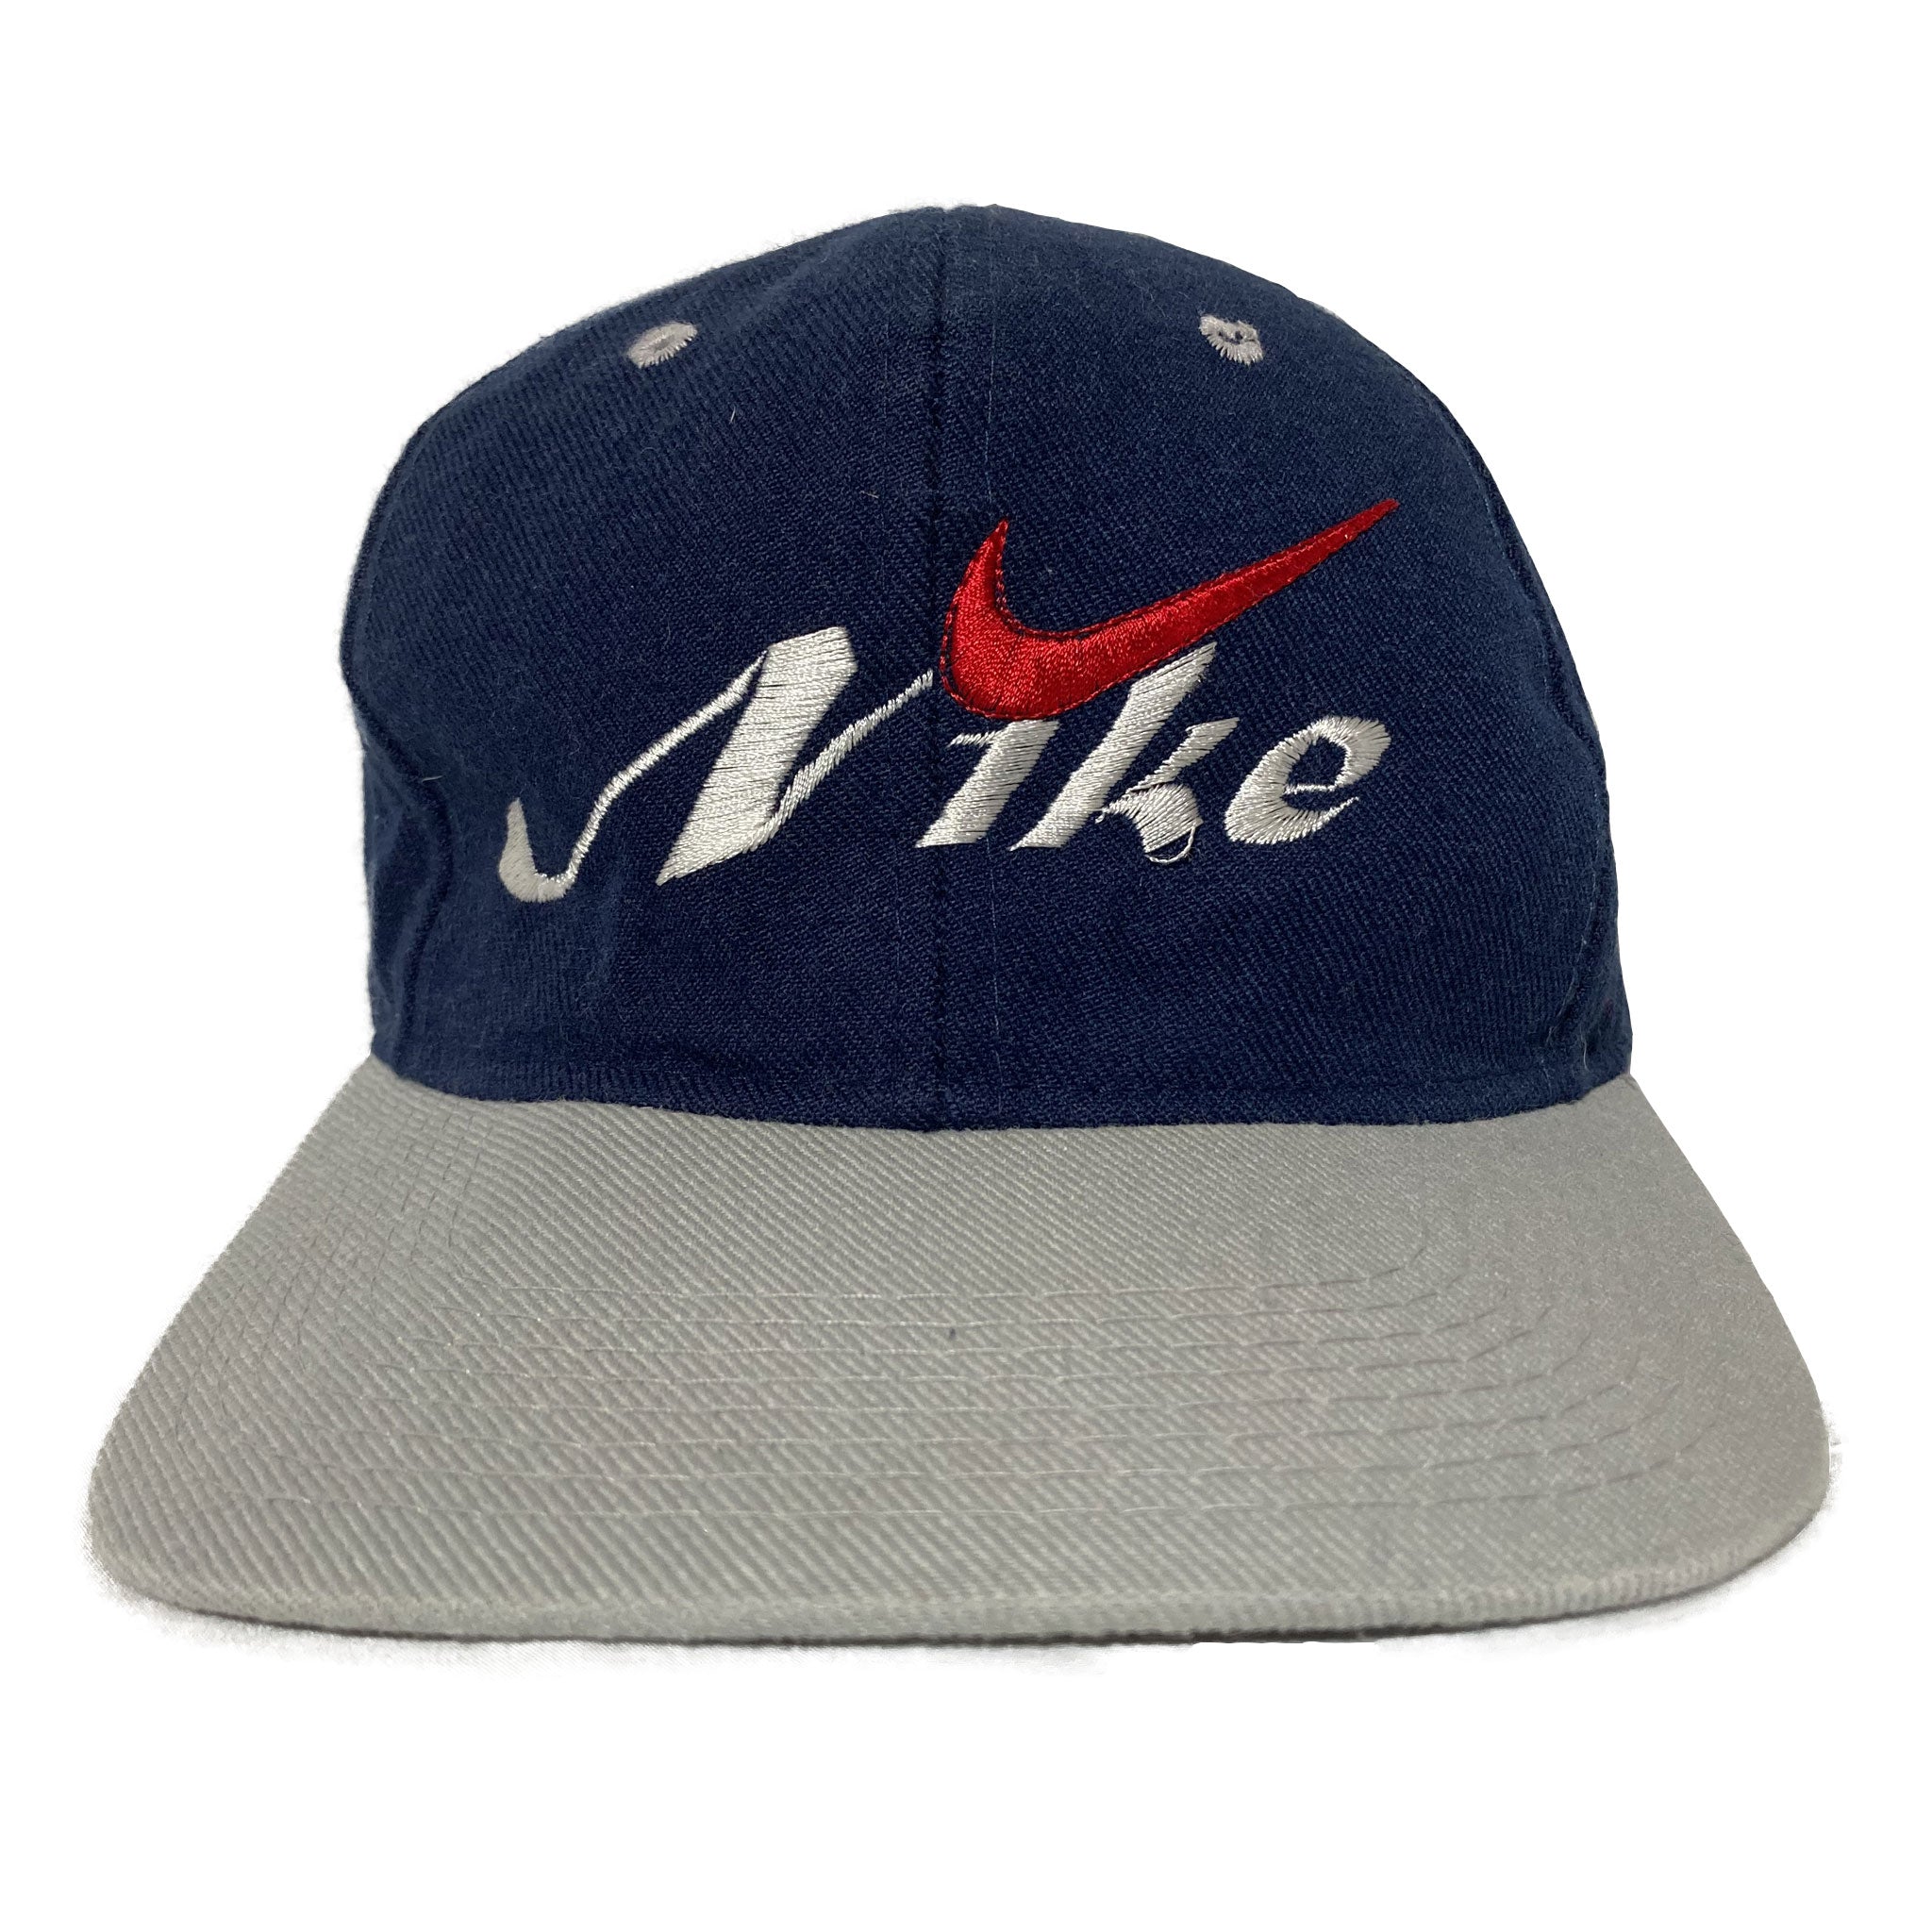 Bootleg Nike Cap